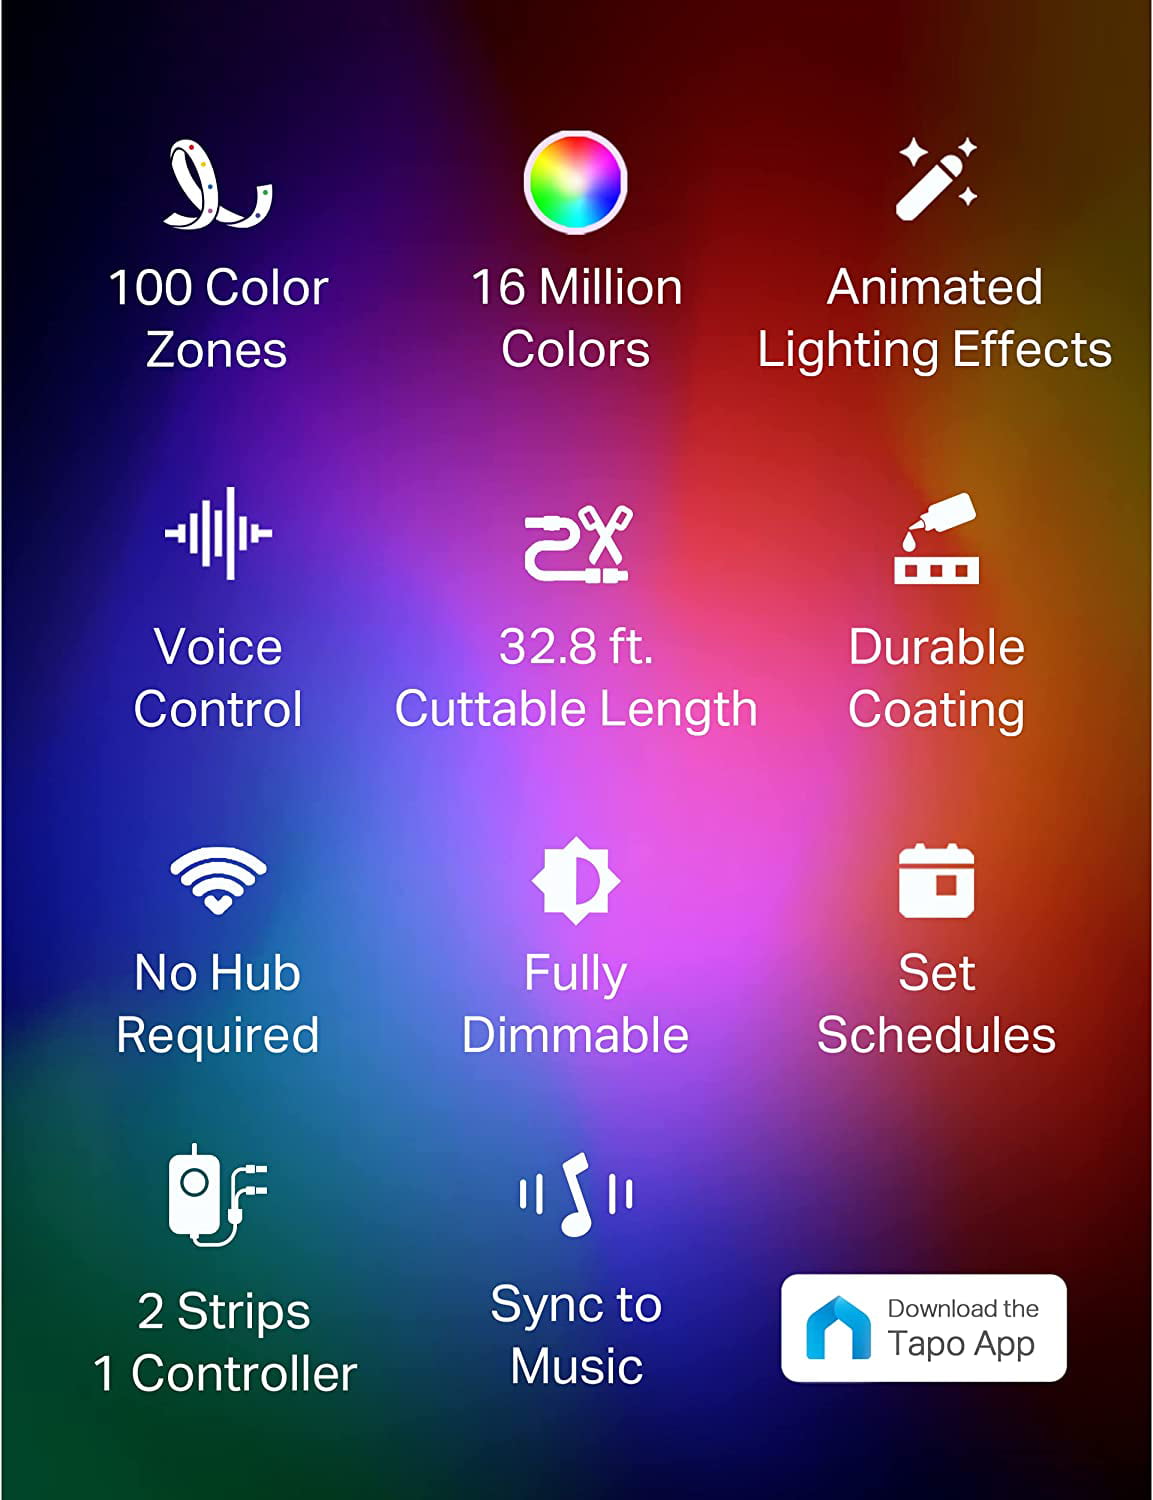 TP-Link Tapo Smart LED Light Strip, 16M RGB Colors, Sync-to-Sound